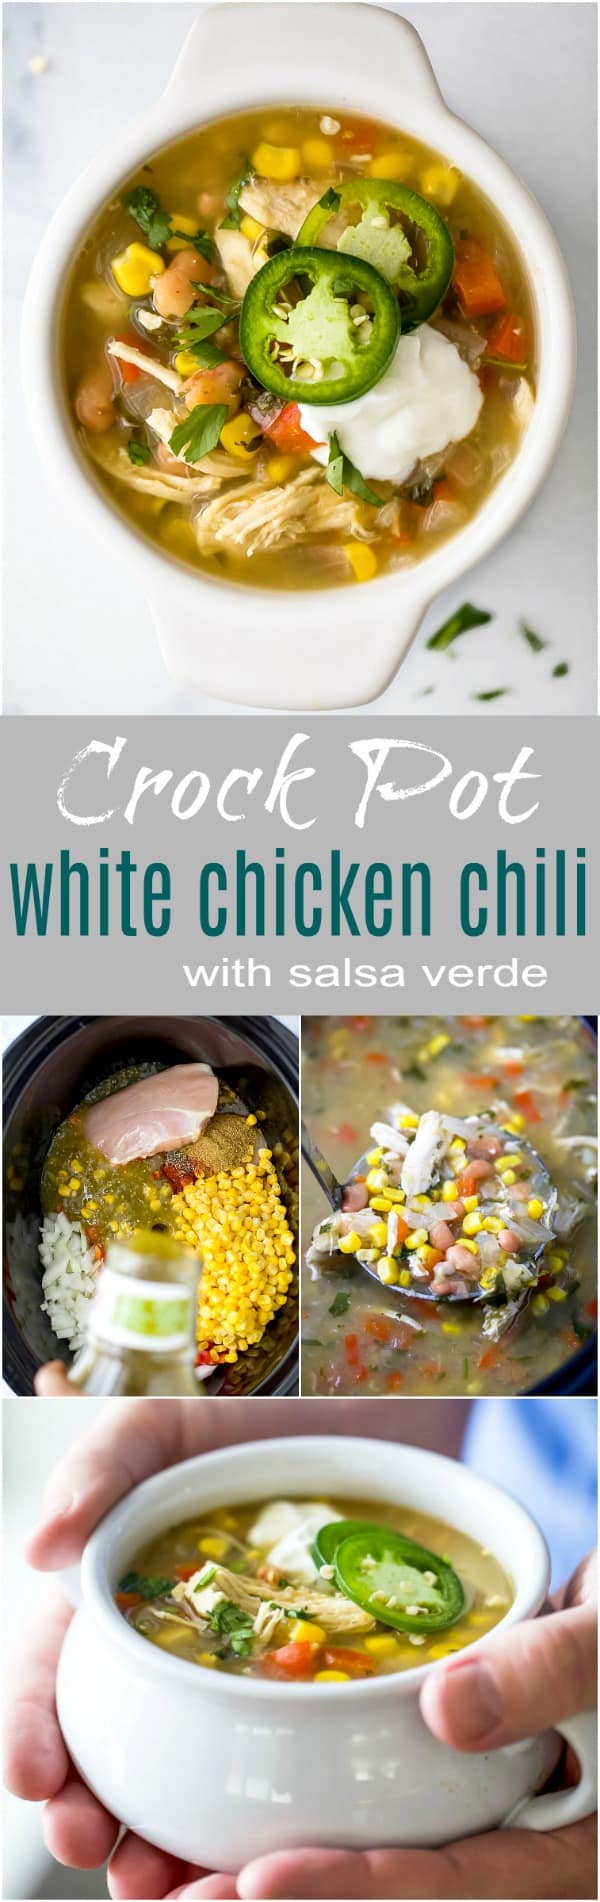 Recipe collage for Crock Pot White Chicken Chili with Salsa Verde